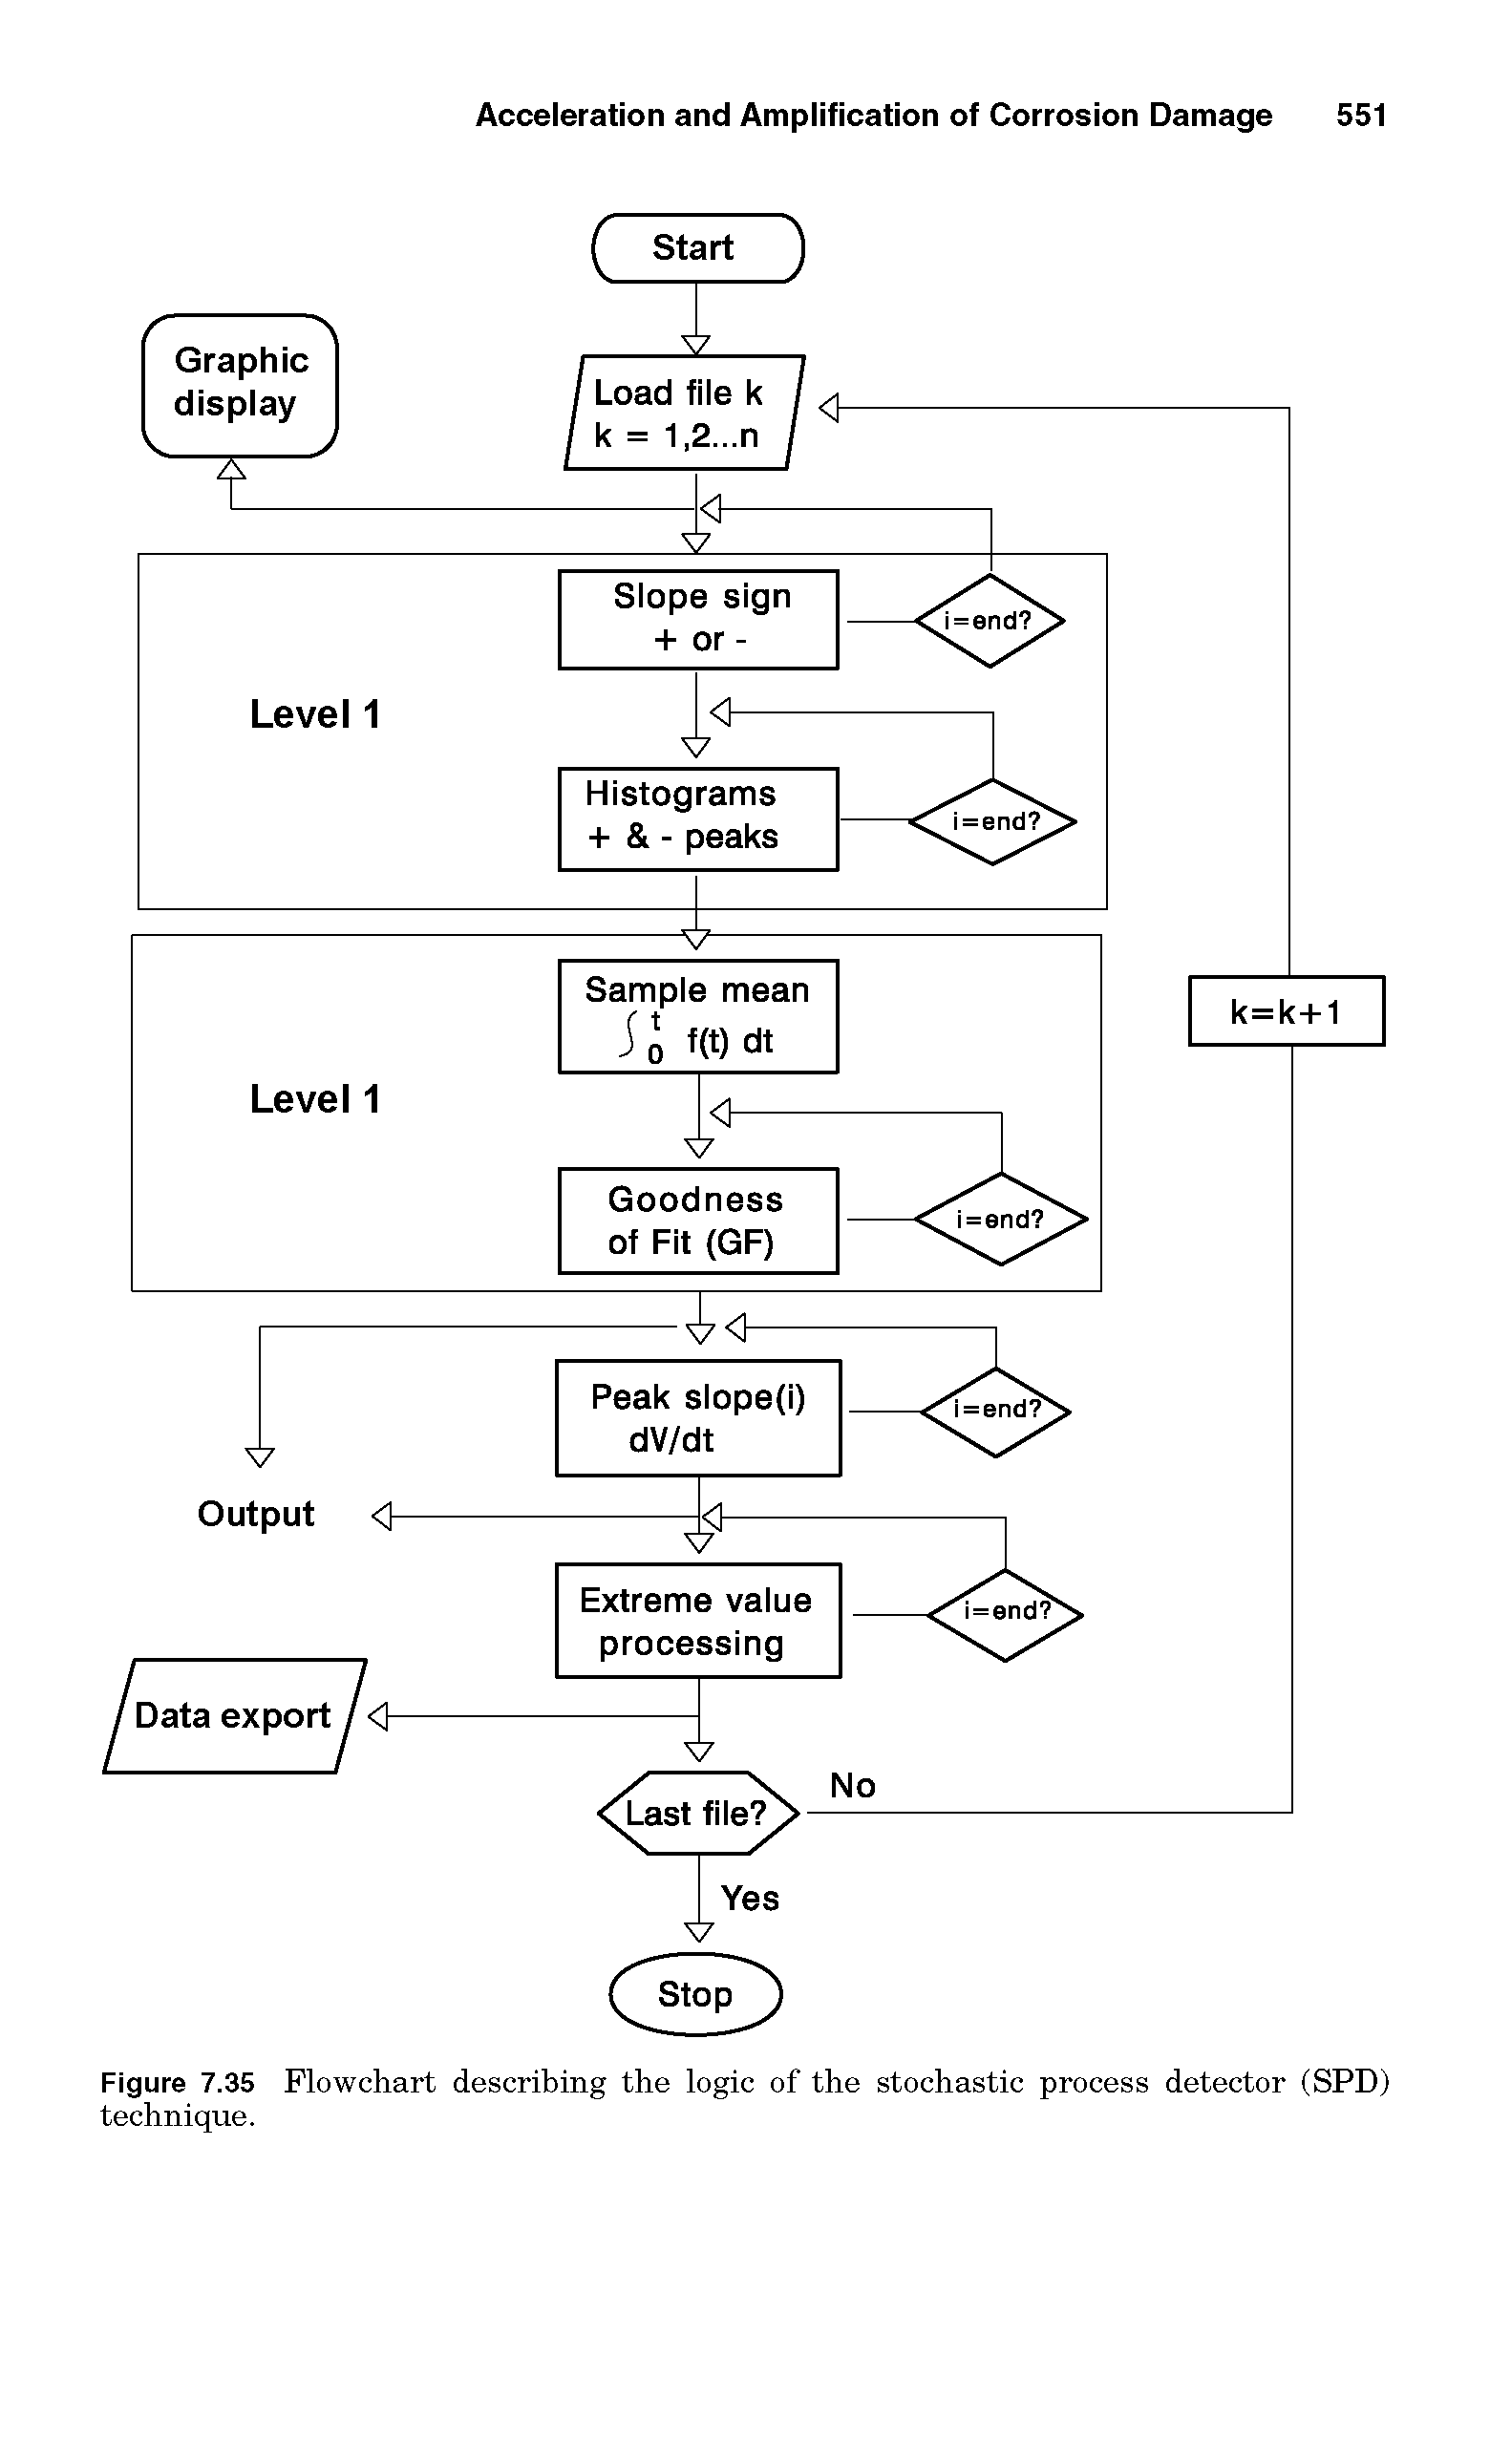 Figure 7.35 Flowchart describing the logic of the stochastic process detector (SPD) technique.